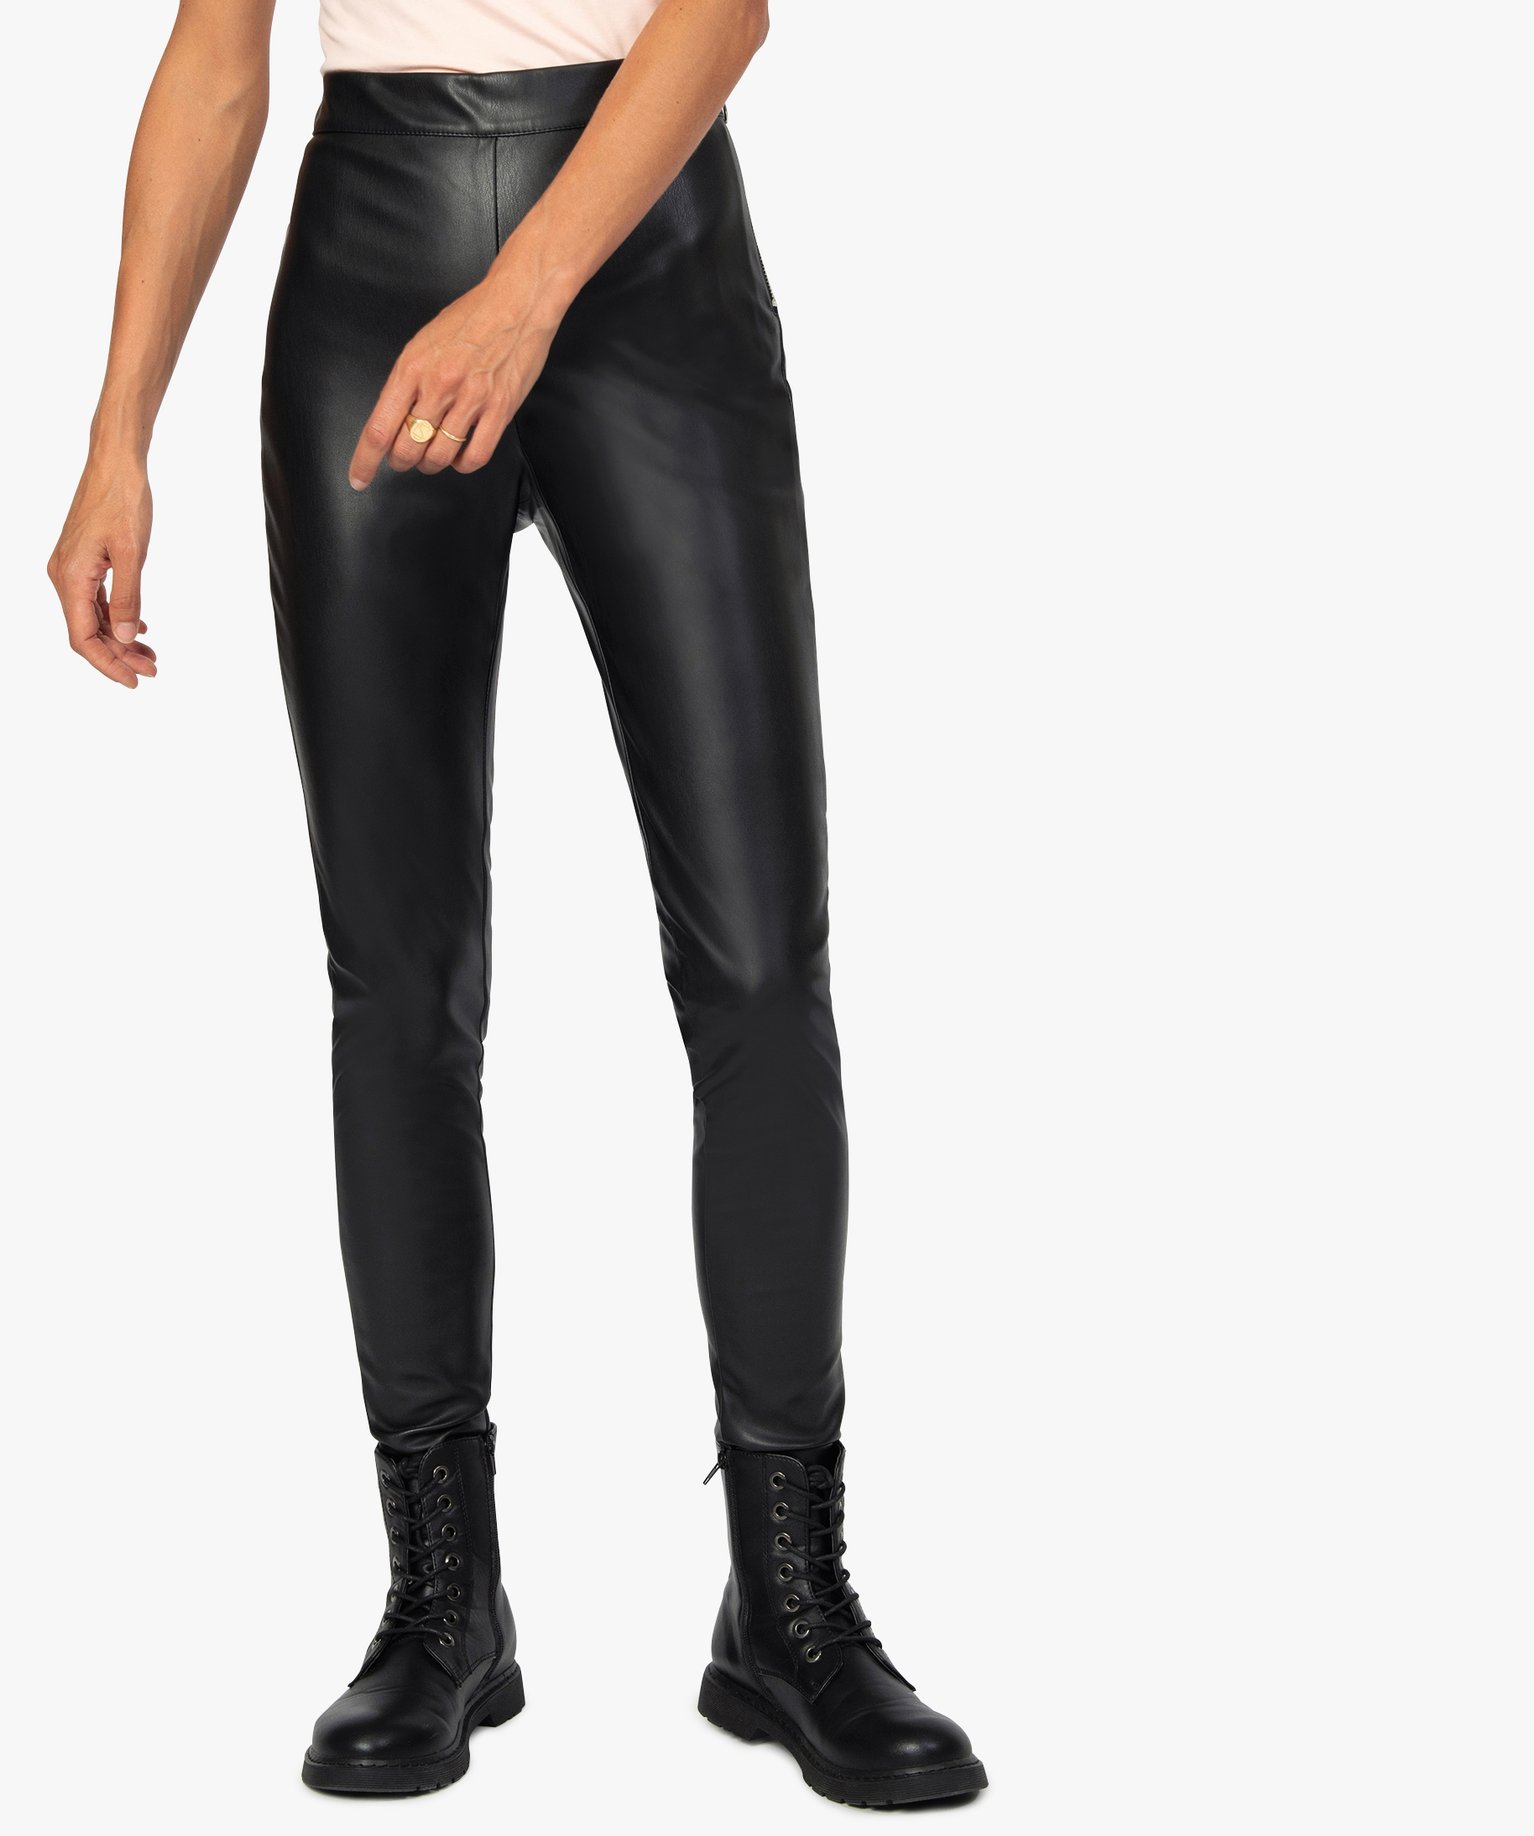 legging femme en cuir imitation avec zip fantaisie noir leggings et jeggings